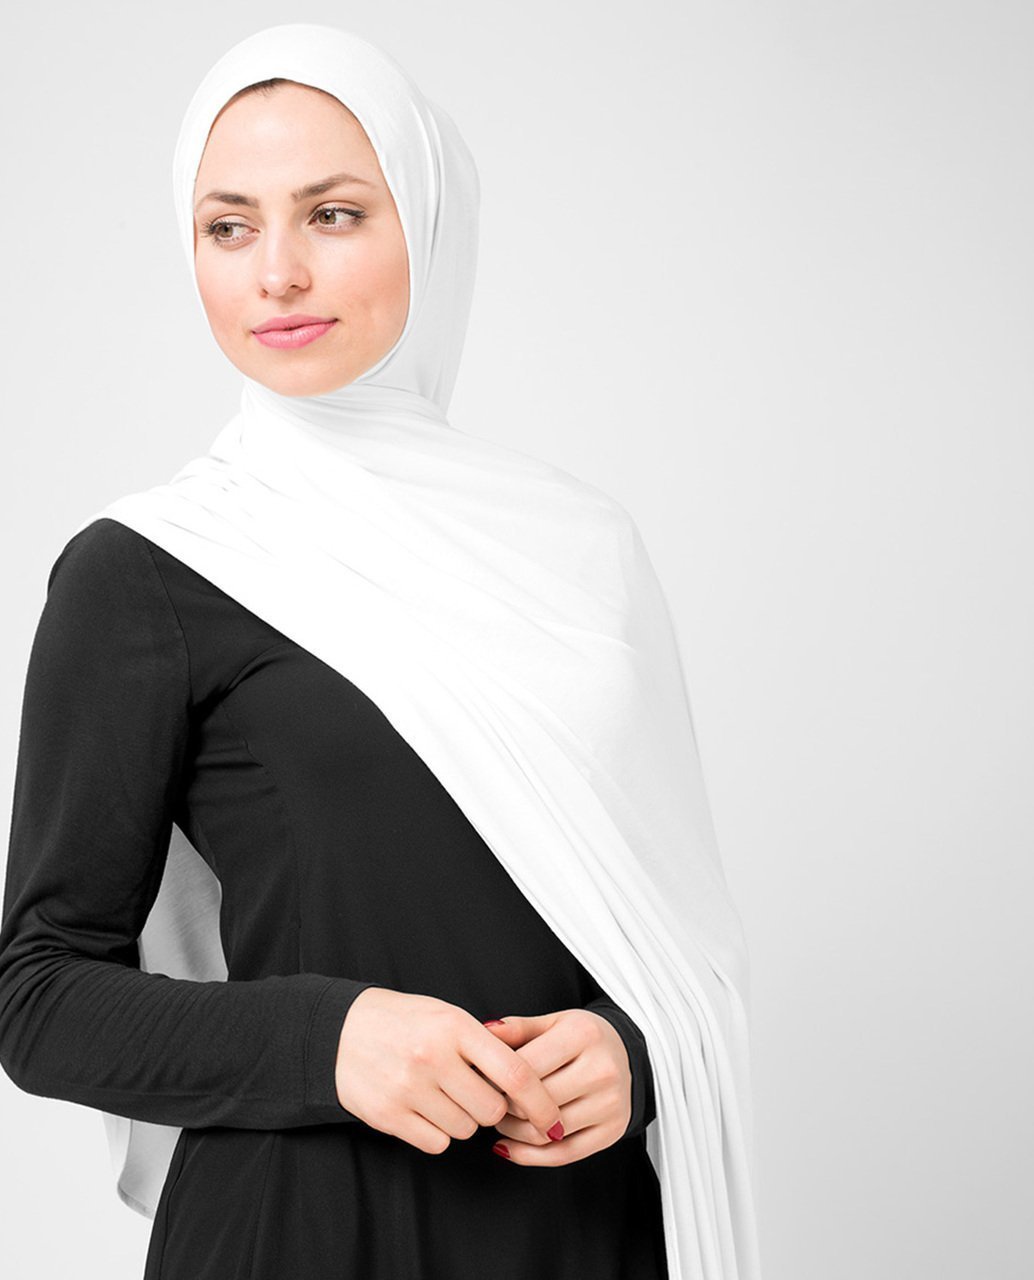 Premium Jersey Hijab - Black and White Striped - ShopperBoard